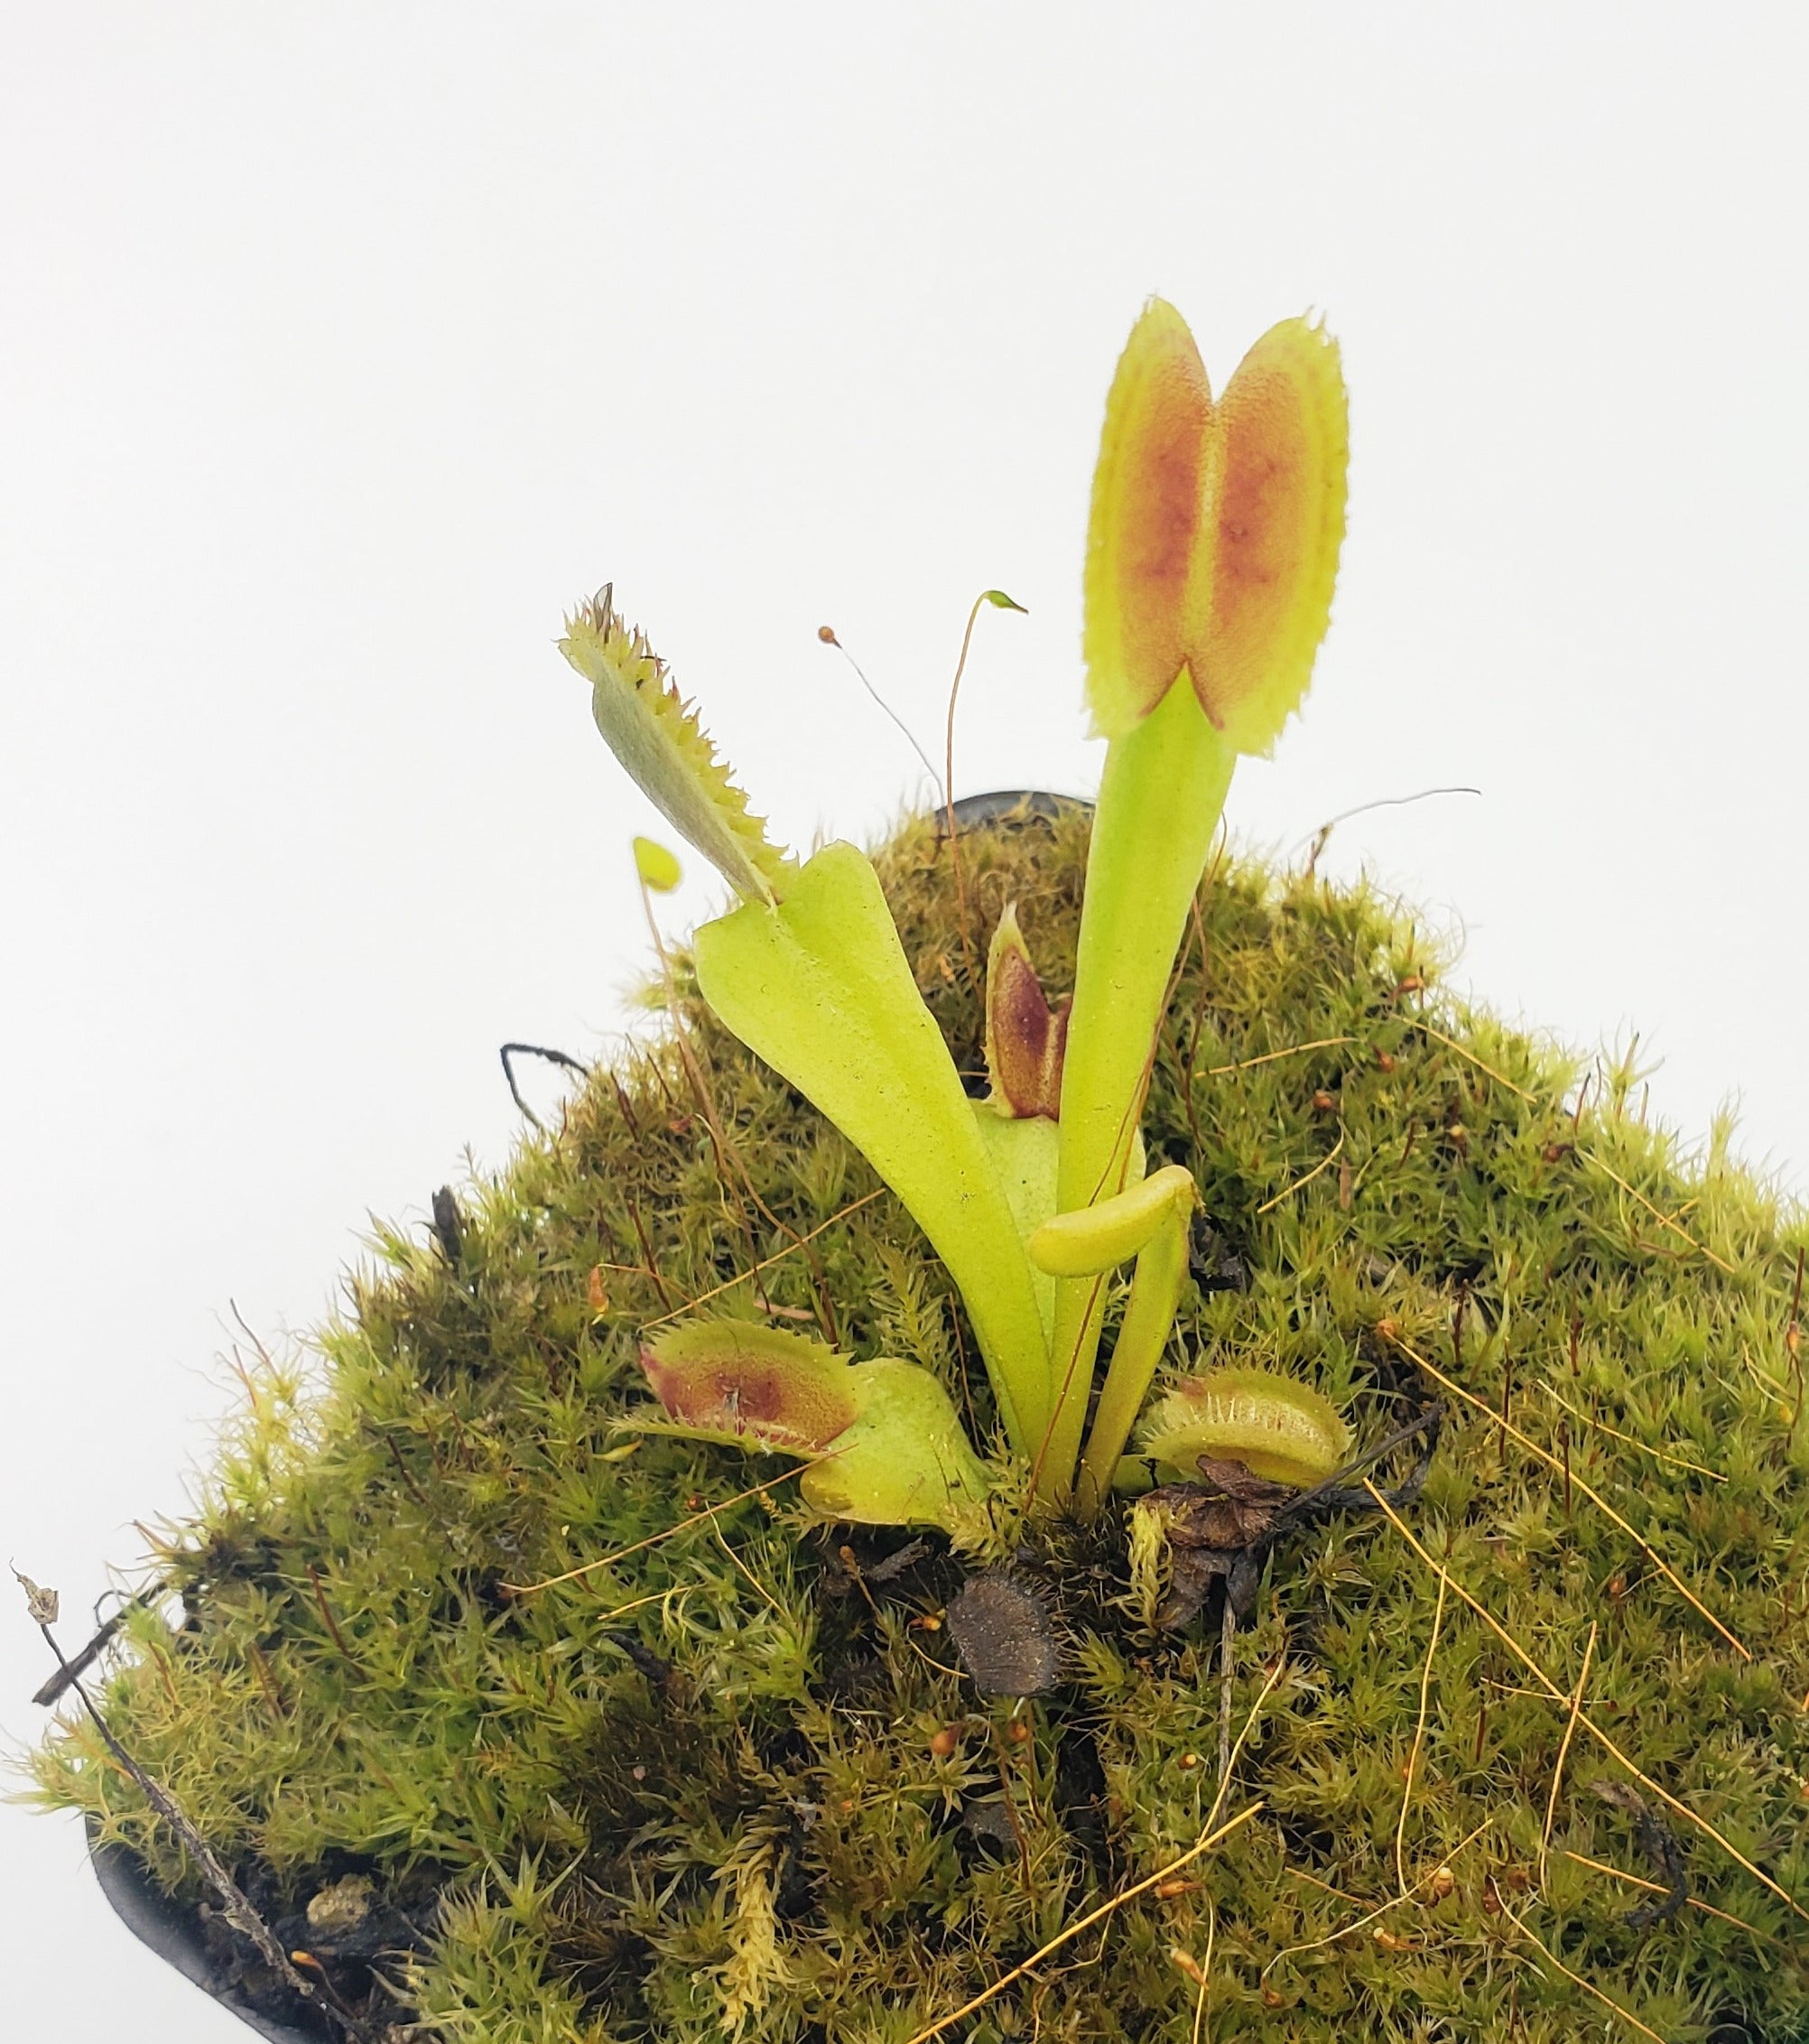 Venus flytrap (Dionaea muscipula) "Vitiligo" - Rainbow Carnivorous Plants LLC